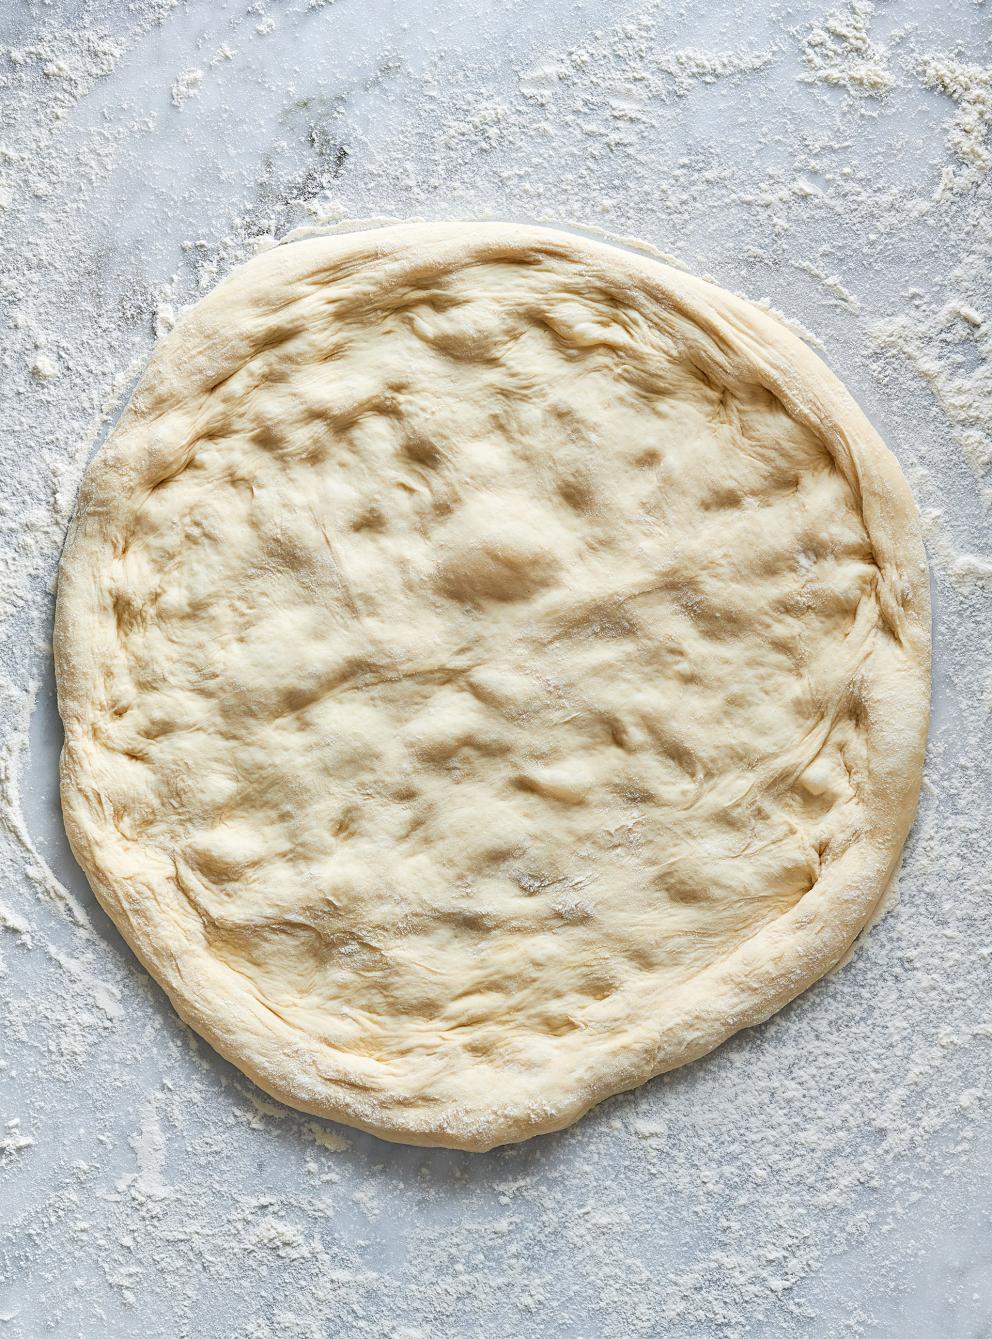 Poolish Recipe – A Pizza Dough Recipe